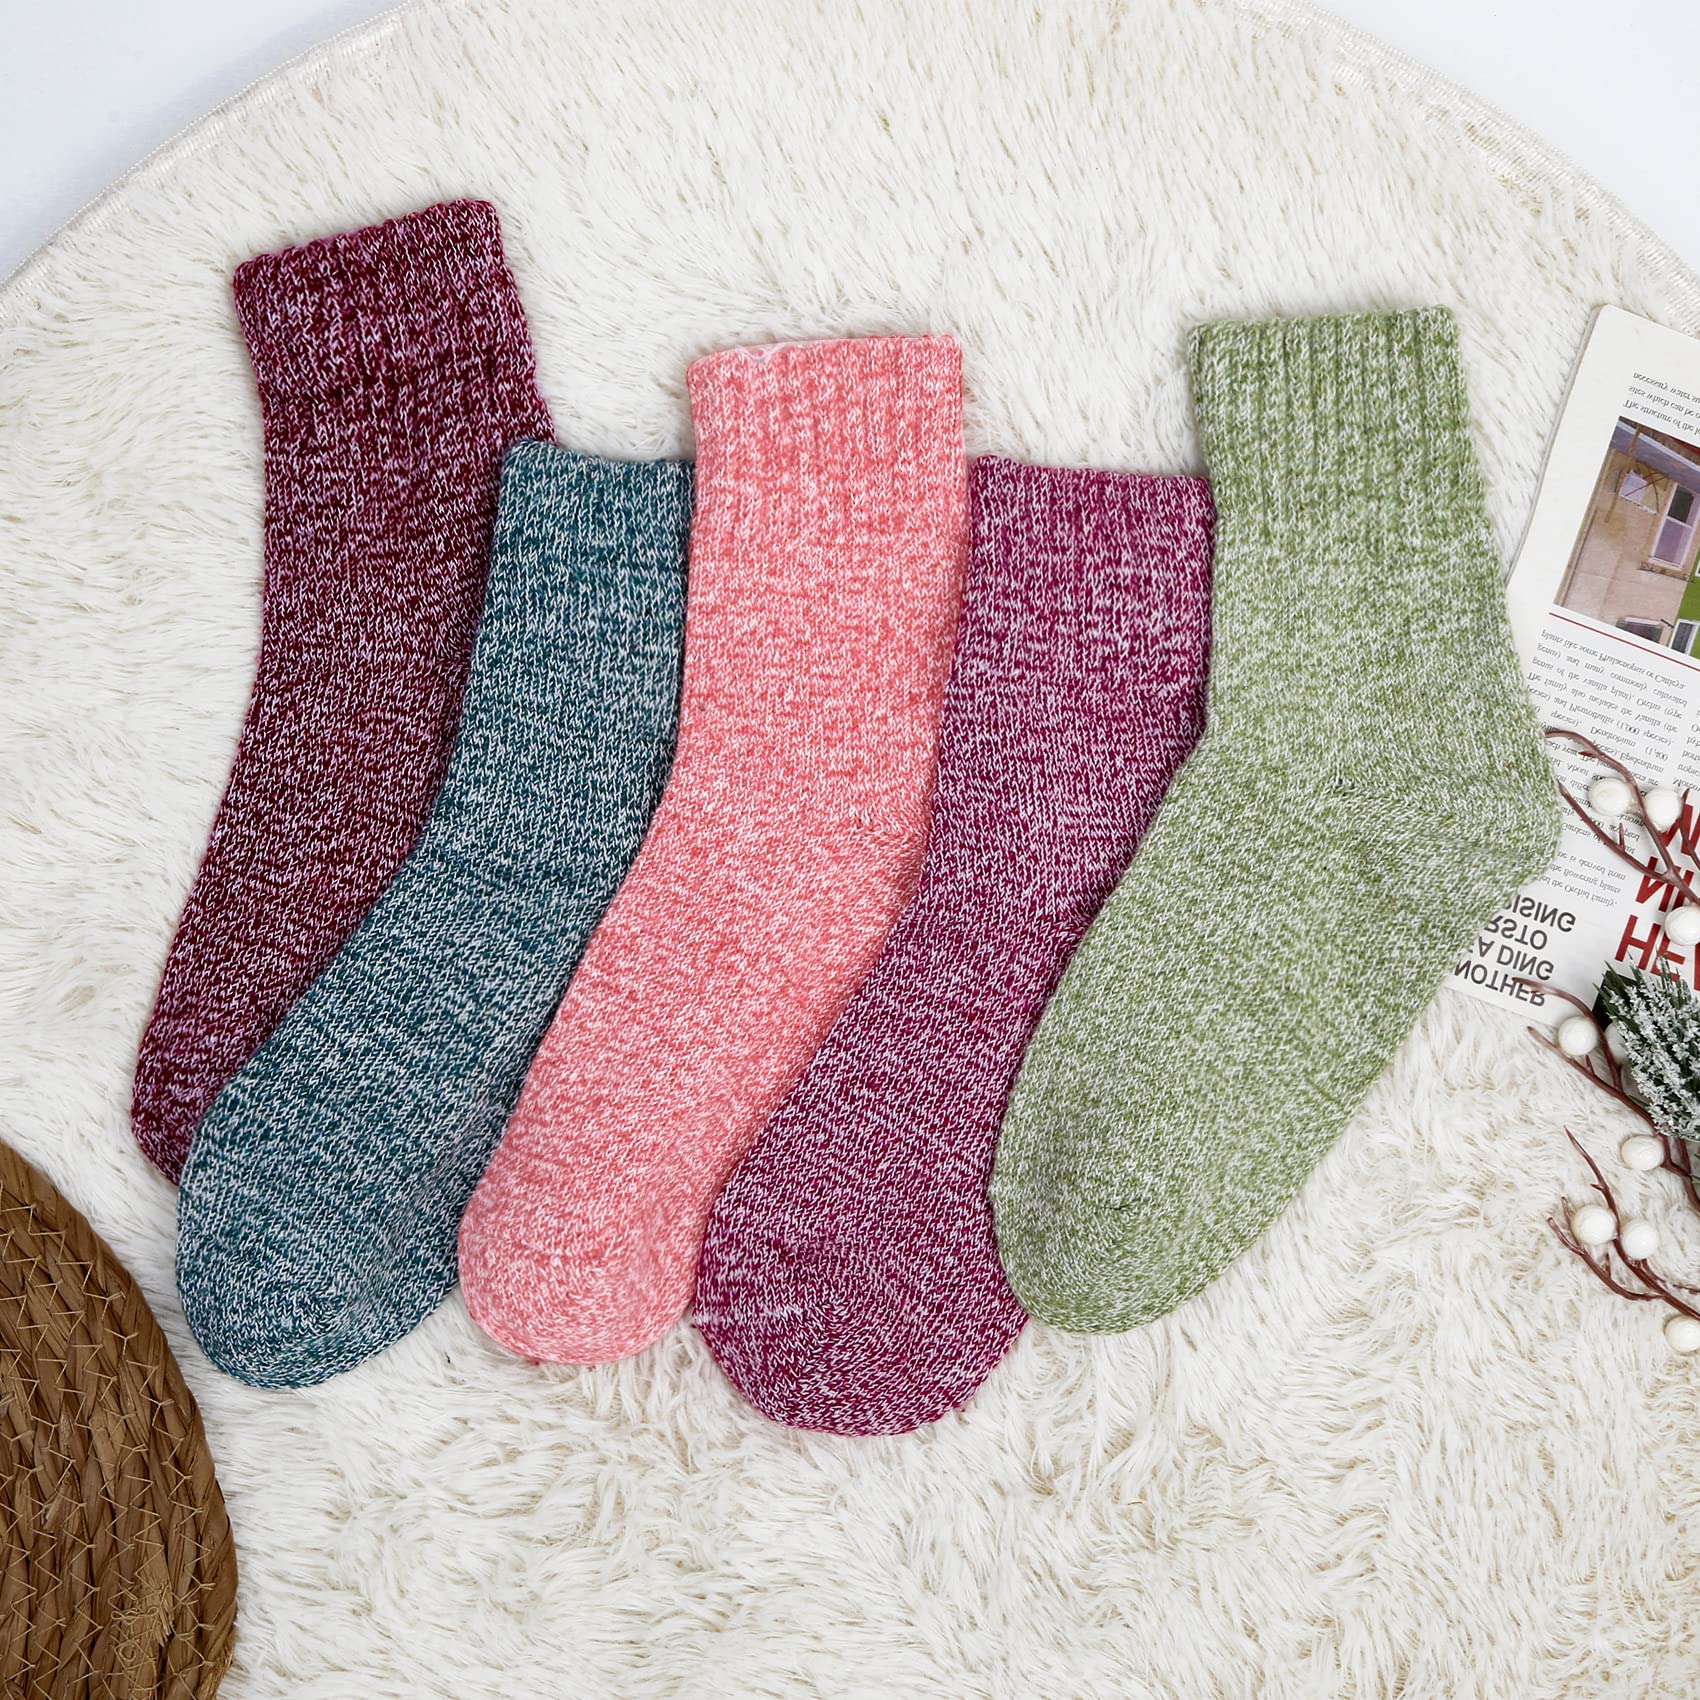 Loritta 5 Pairs Womens Wool Socks Thick Knit Vintage Winter Warm Cozy Crew Socks Gifts